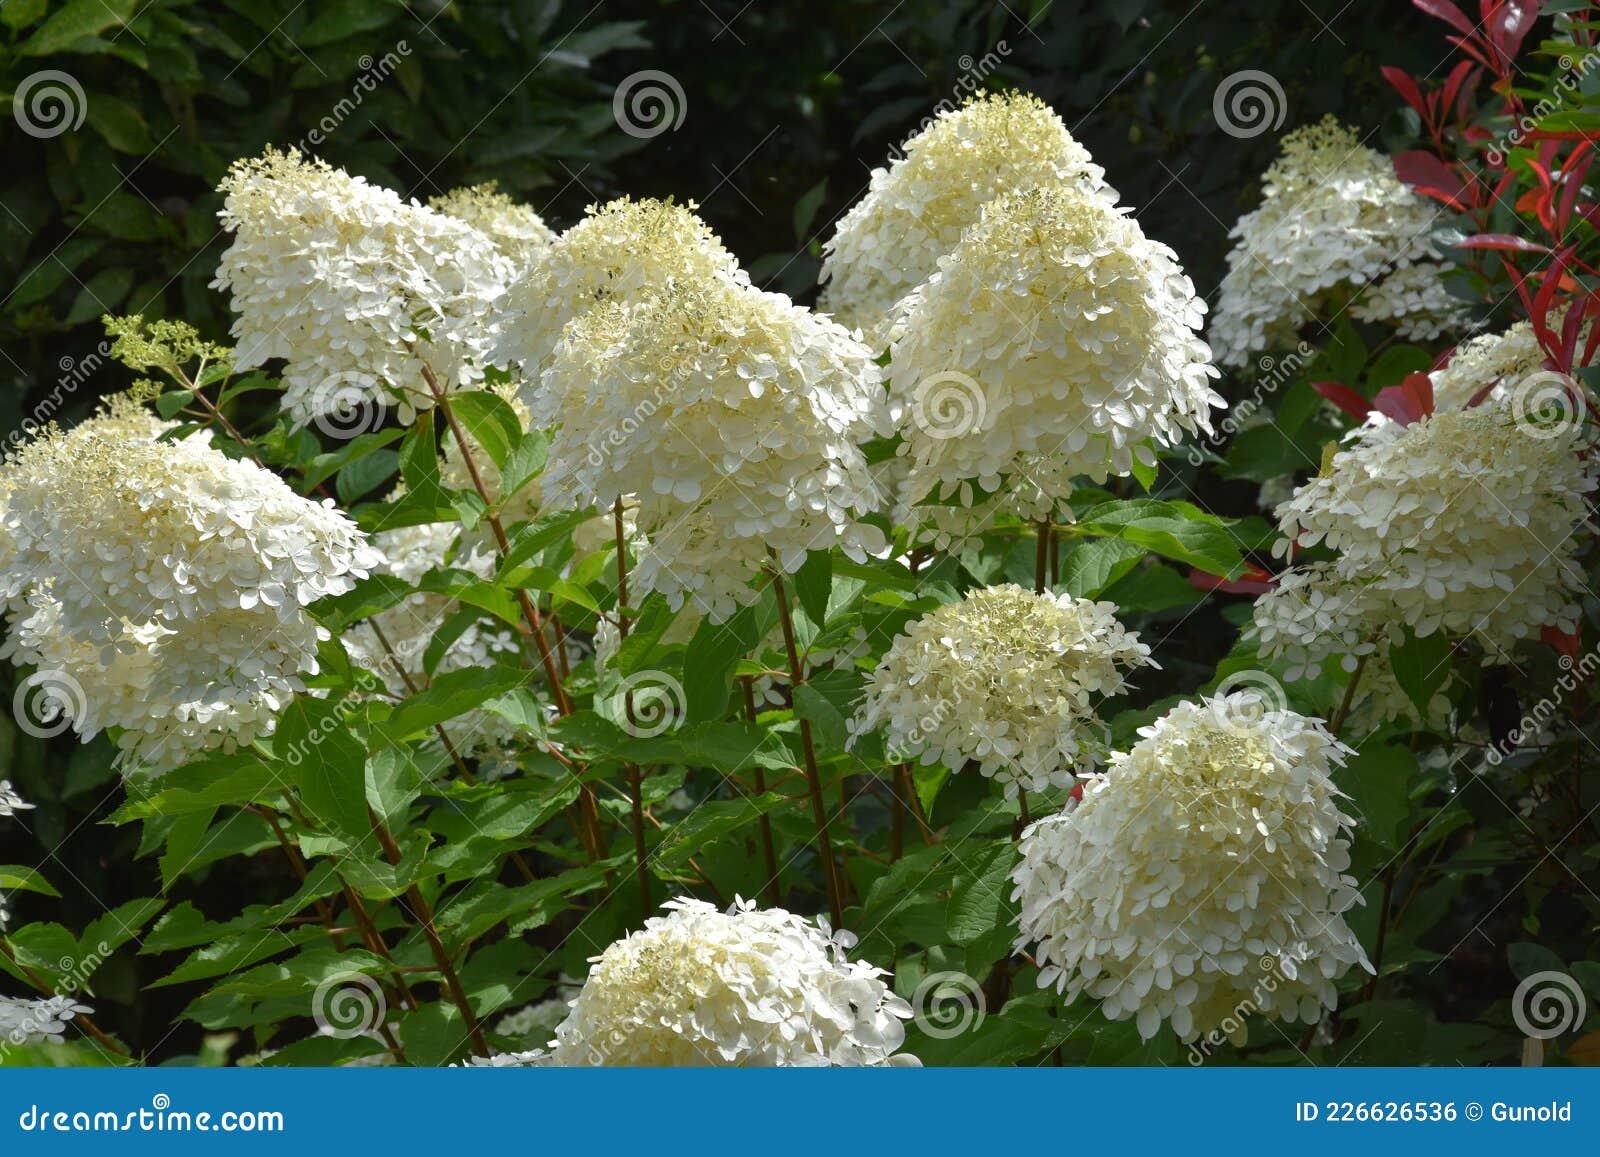 hydrangea paniculata or limelight flower